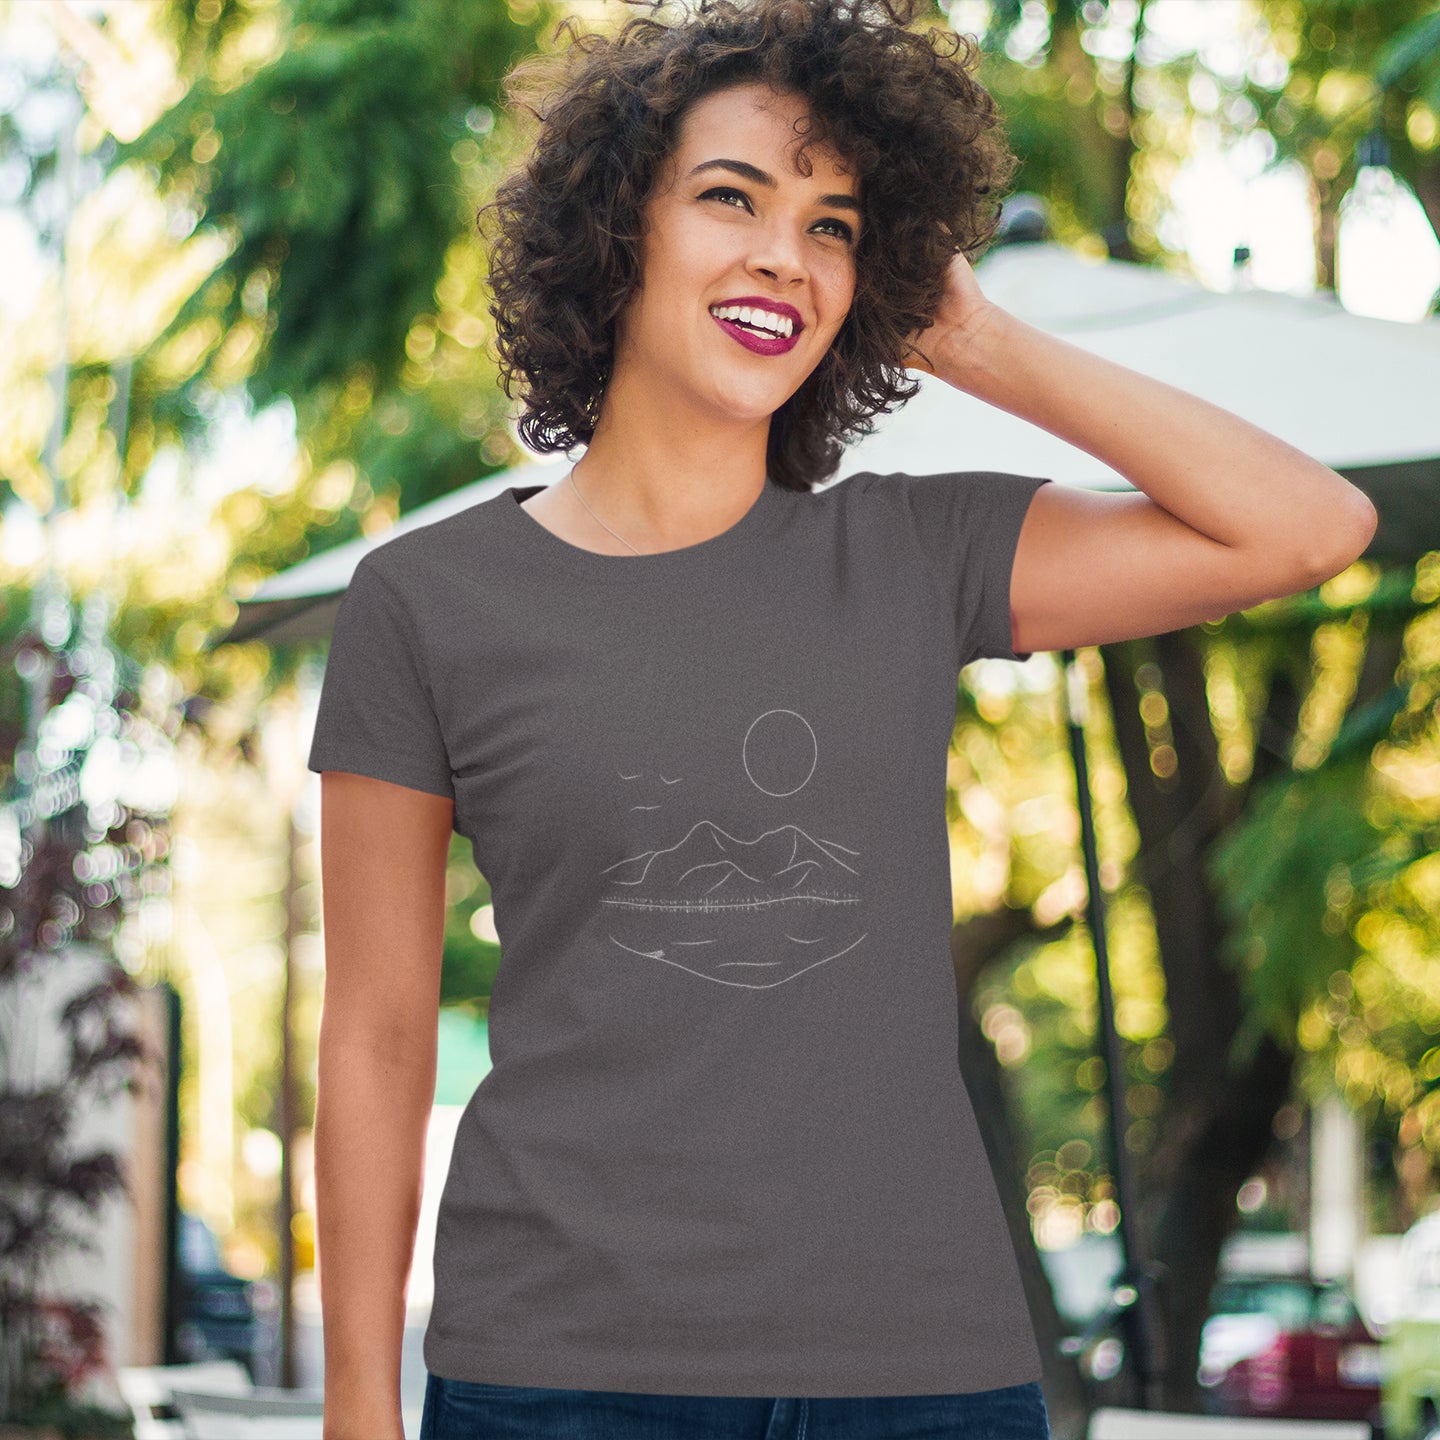 White Mountain Serenity | 100% Organic Cotton T Shirt worn by a woman